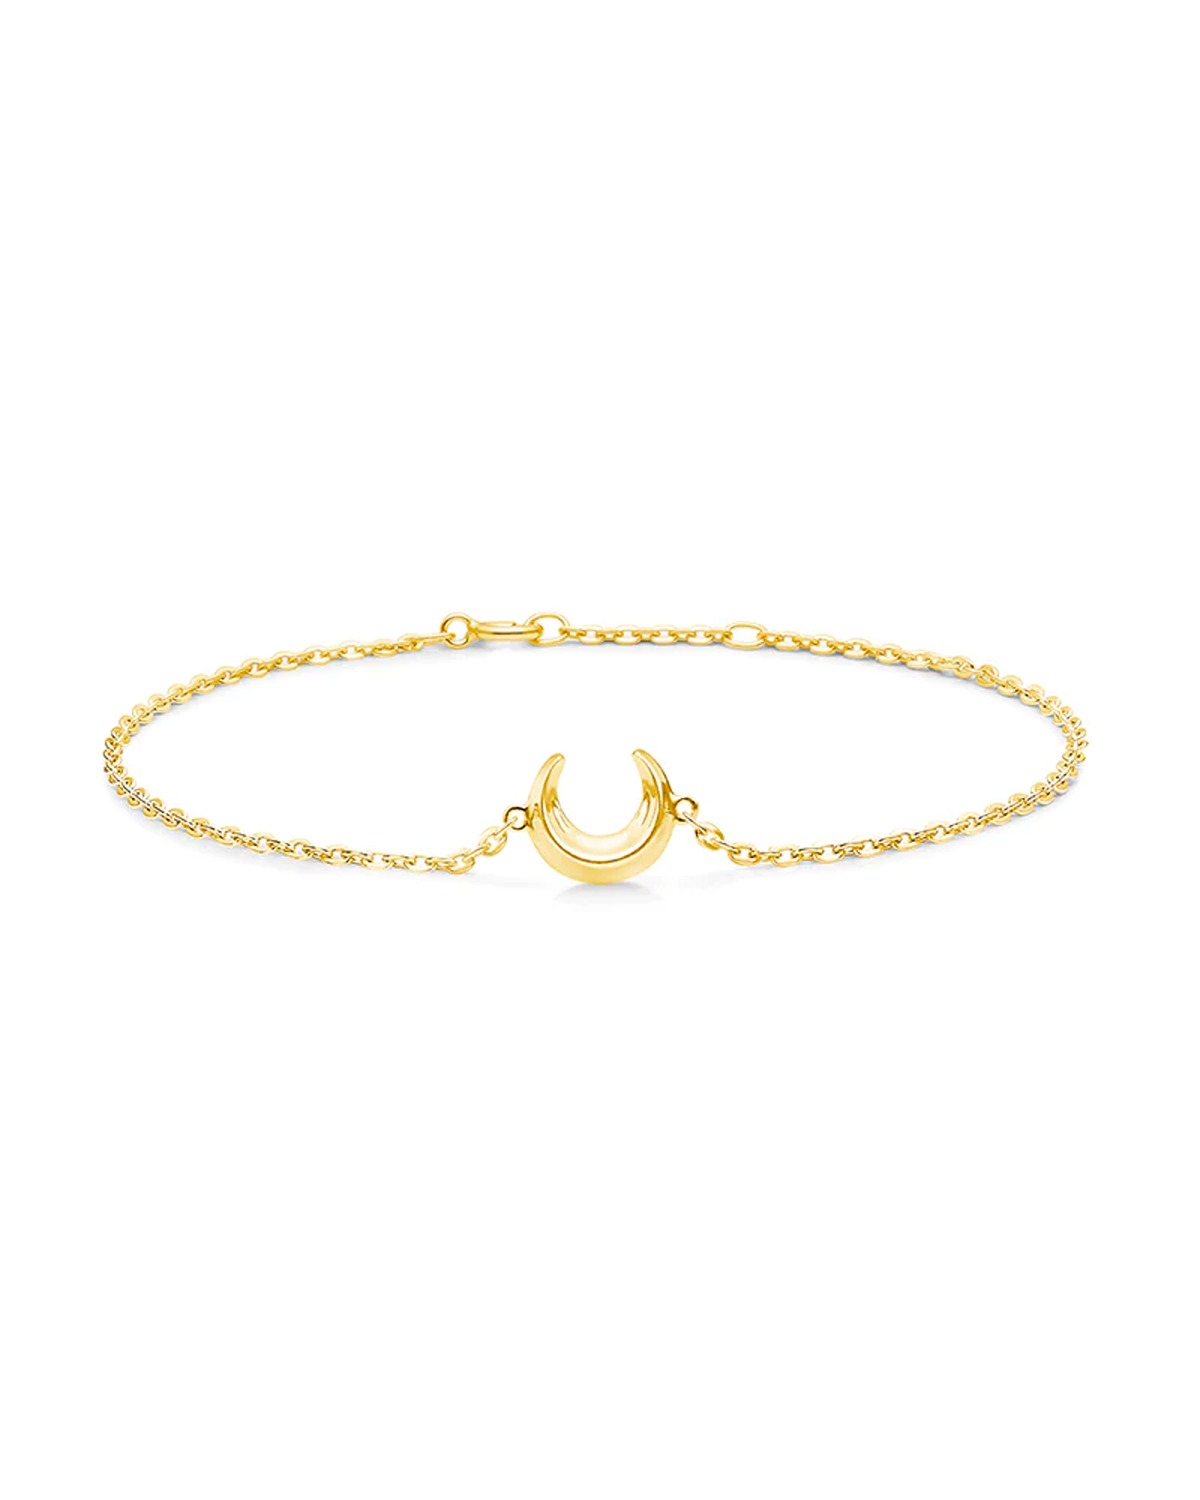 Cresent Moon Bracelet Gold - Idfine